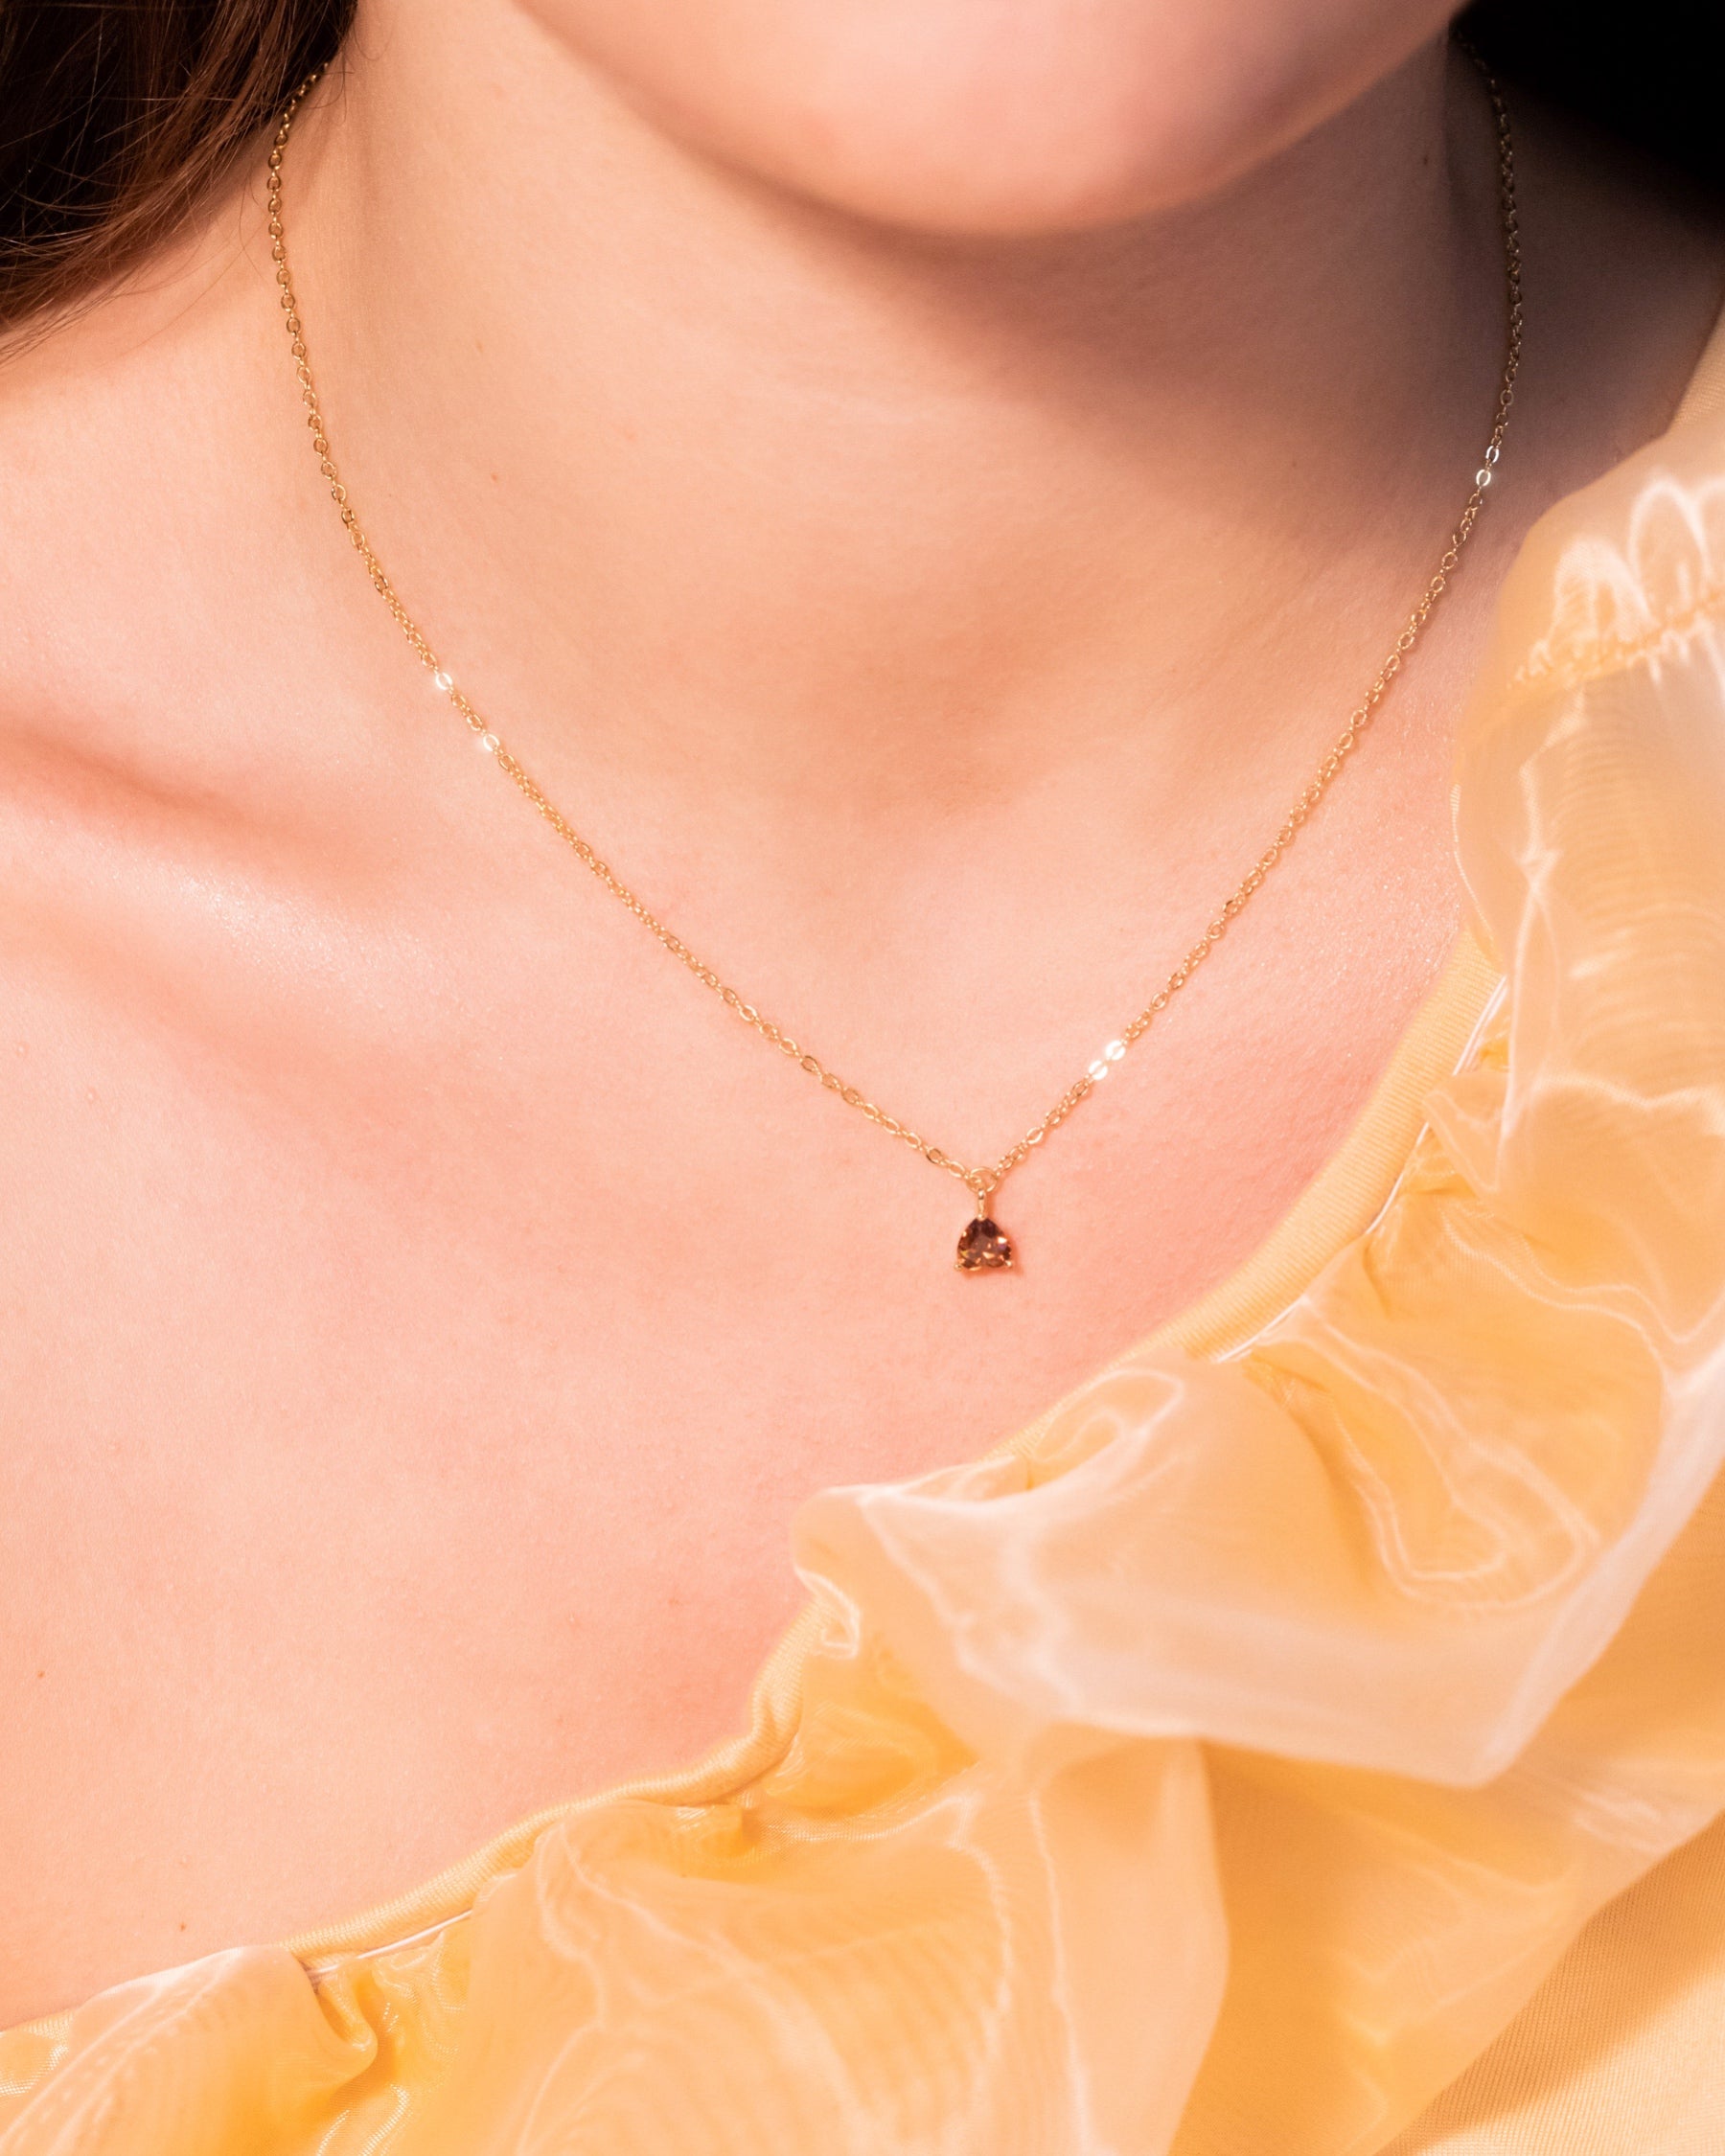 Chestnut pendant necklace